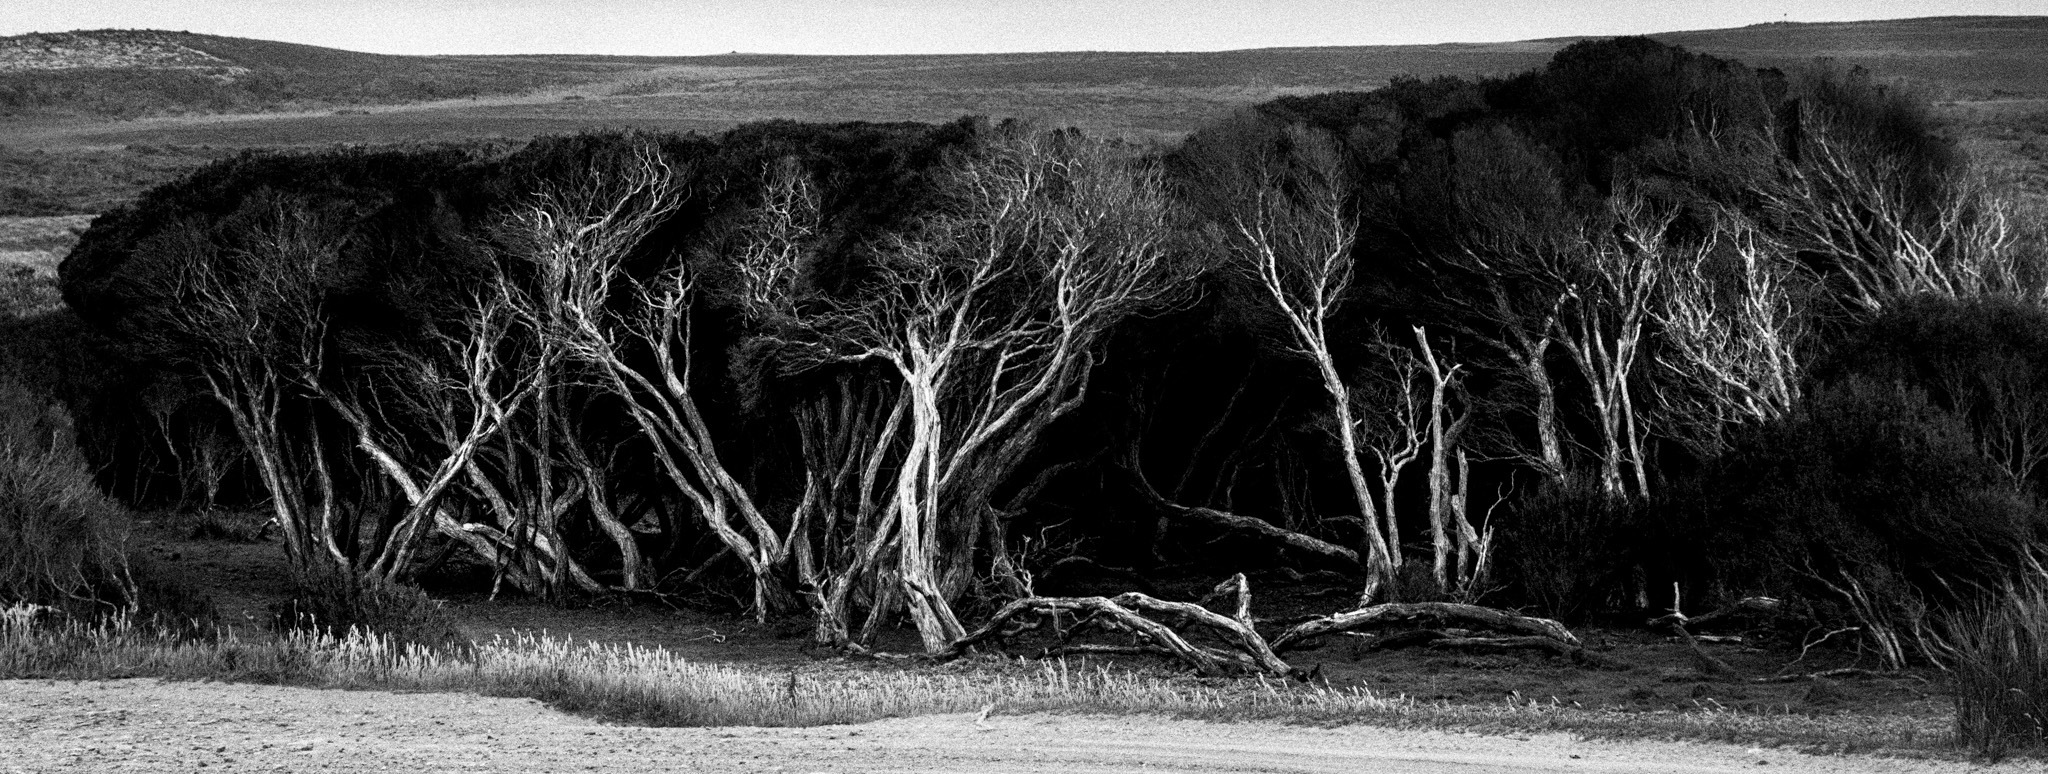 Widow trees, Tasmania - Andras Ikladi